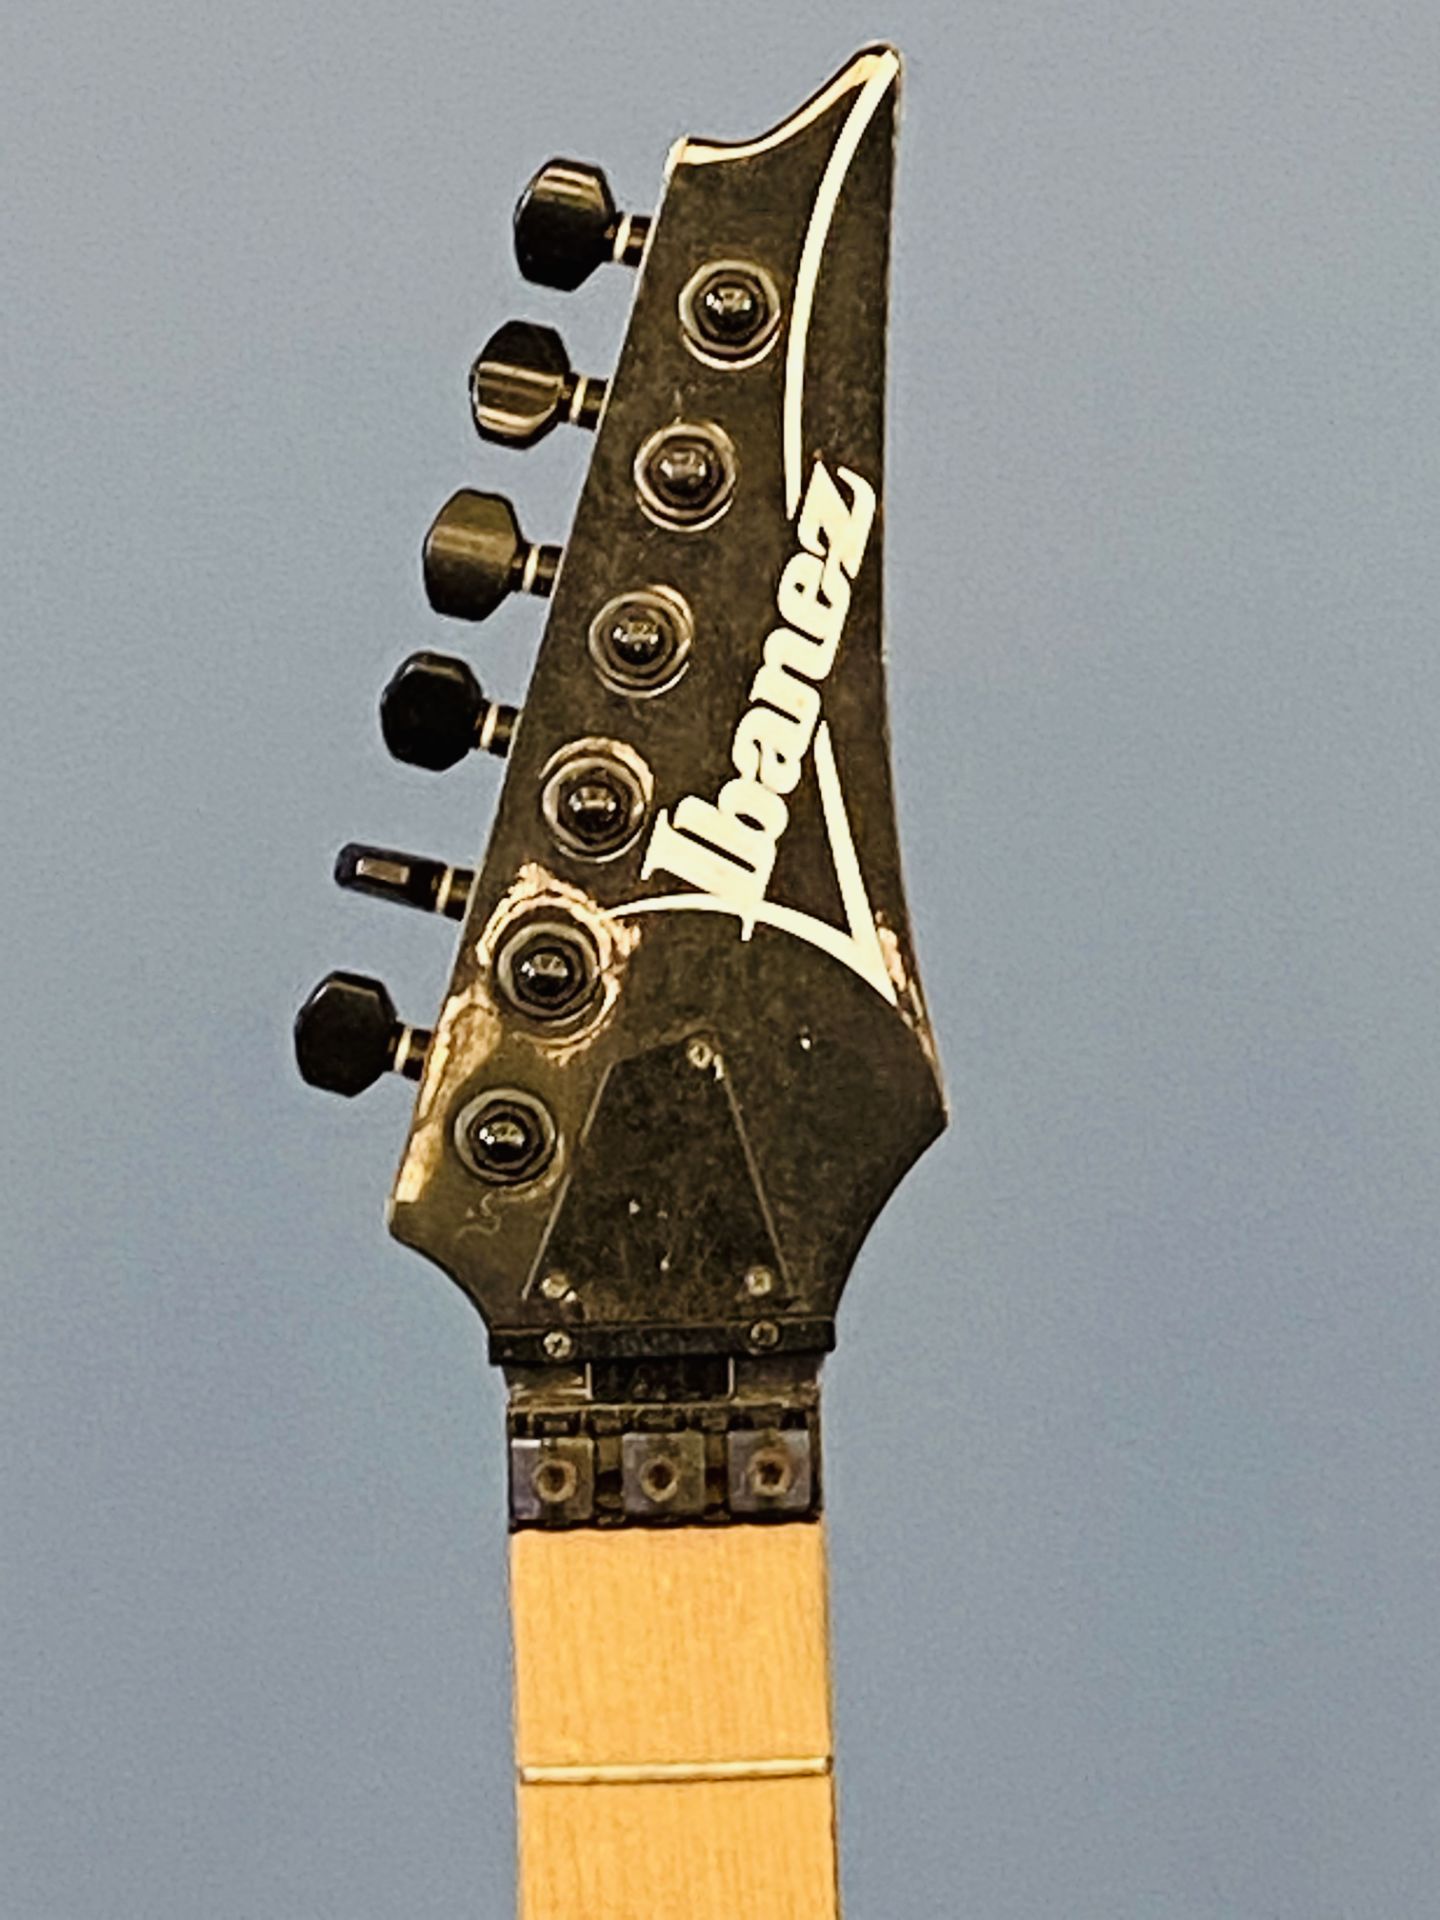 Ibanez electric guitar, RG550, made in Japan - Image 2 of 4